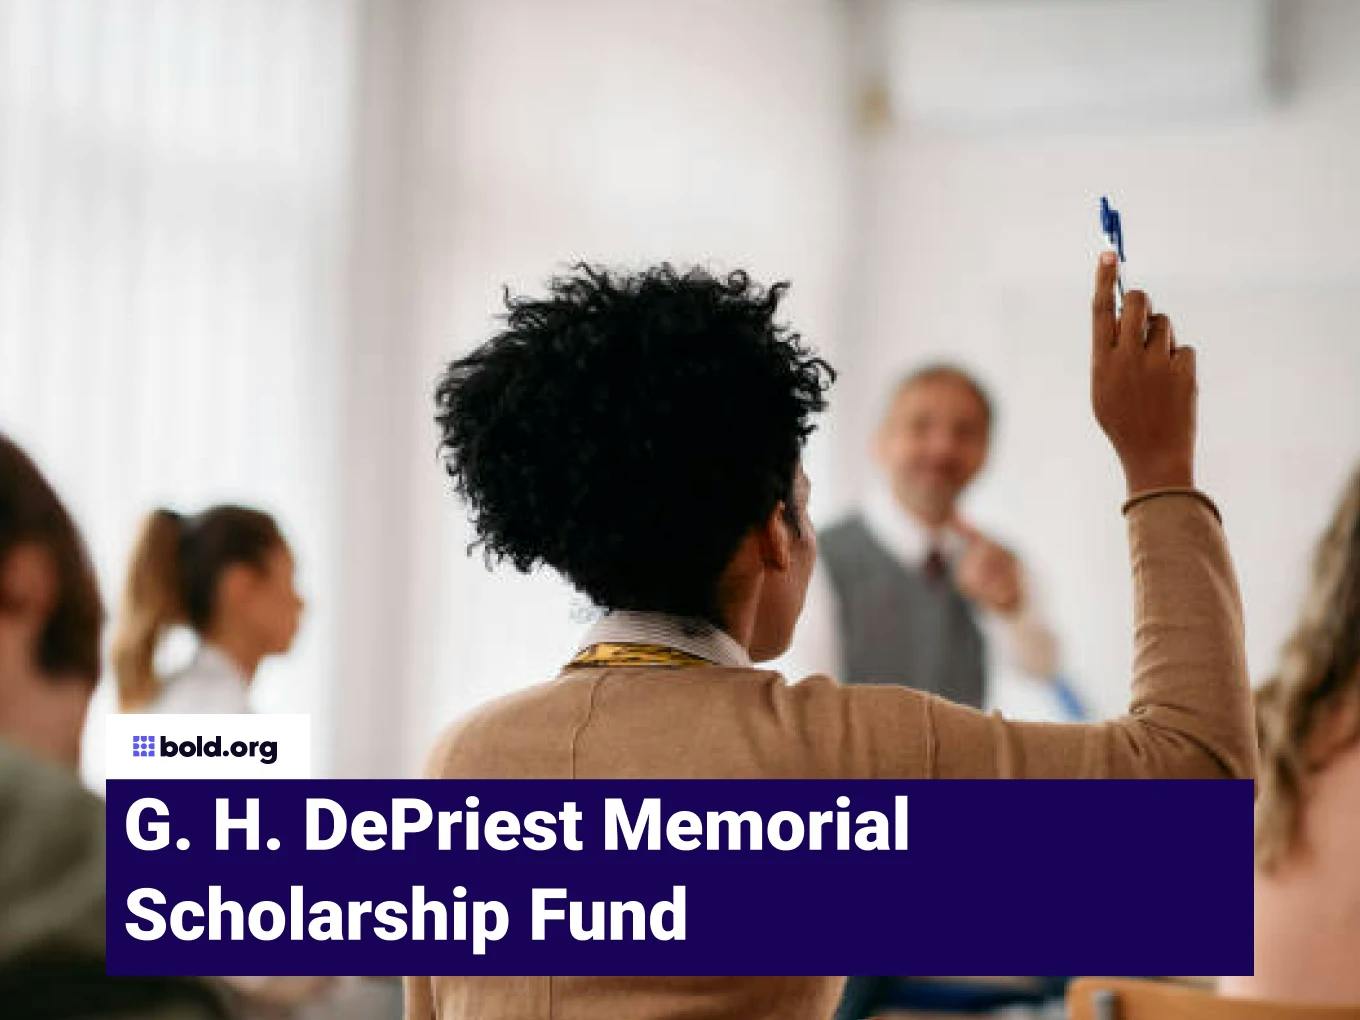 G. H. DePriest Memorial Scholarship Fund